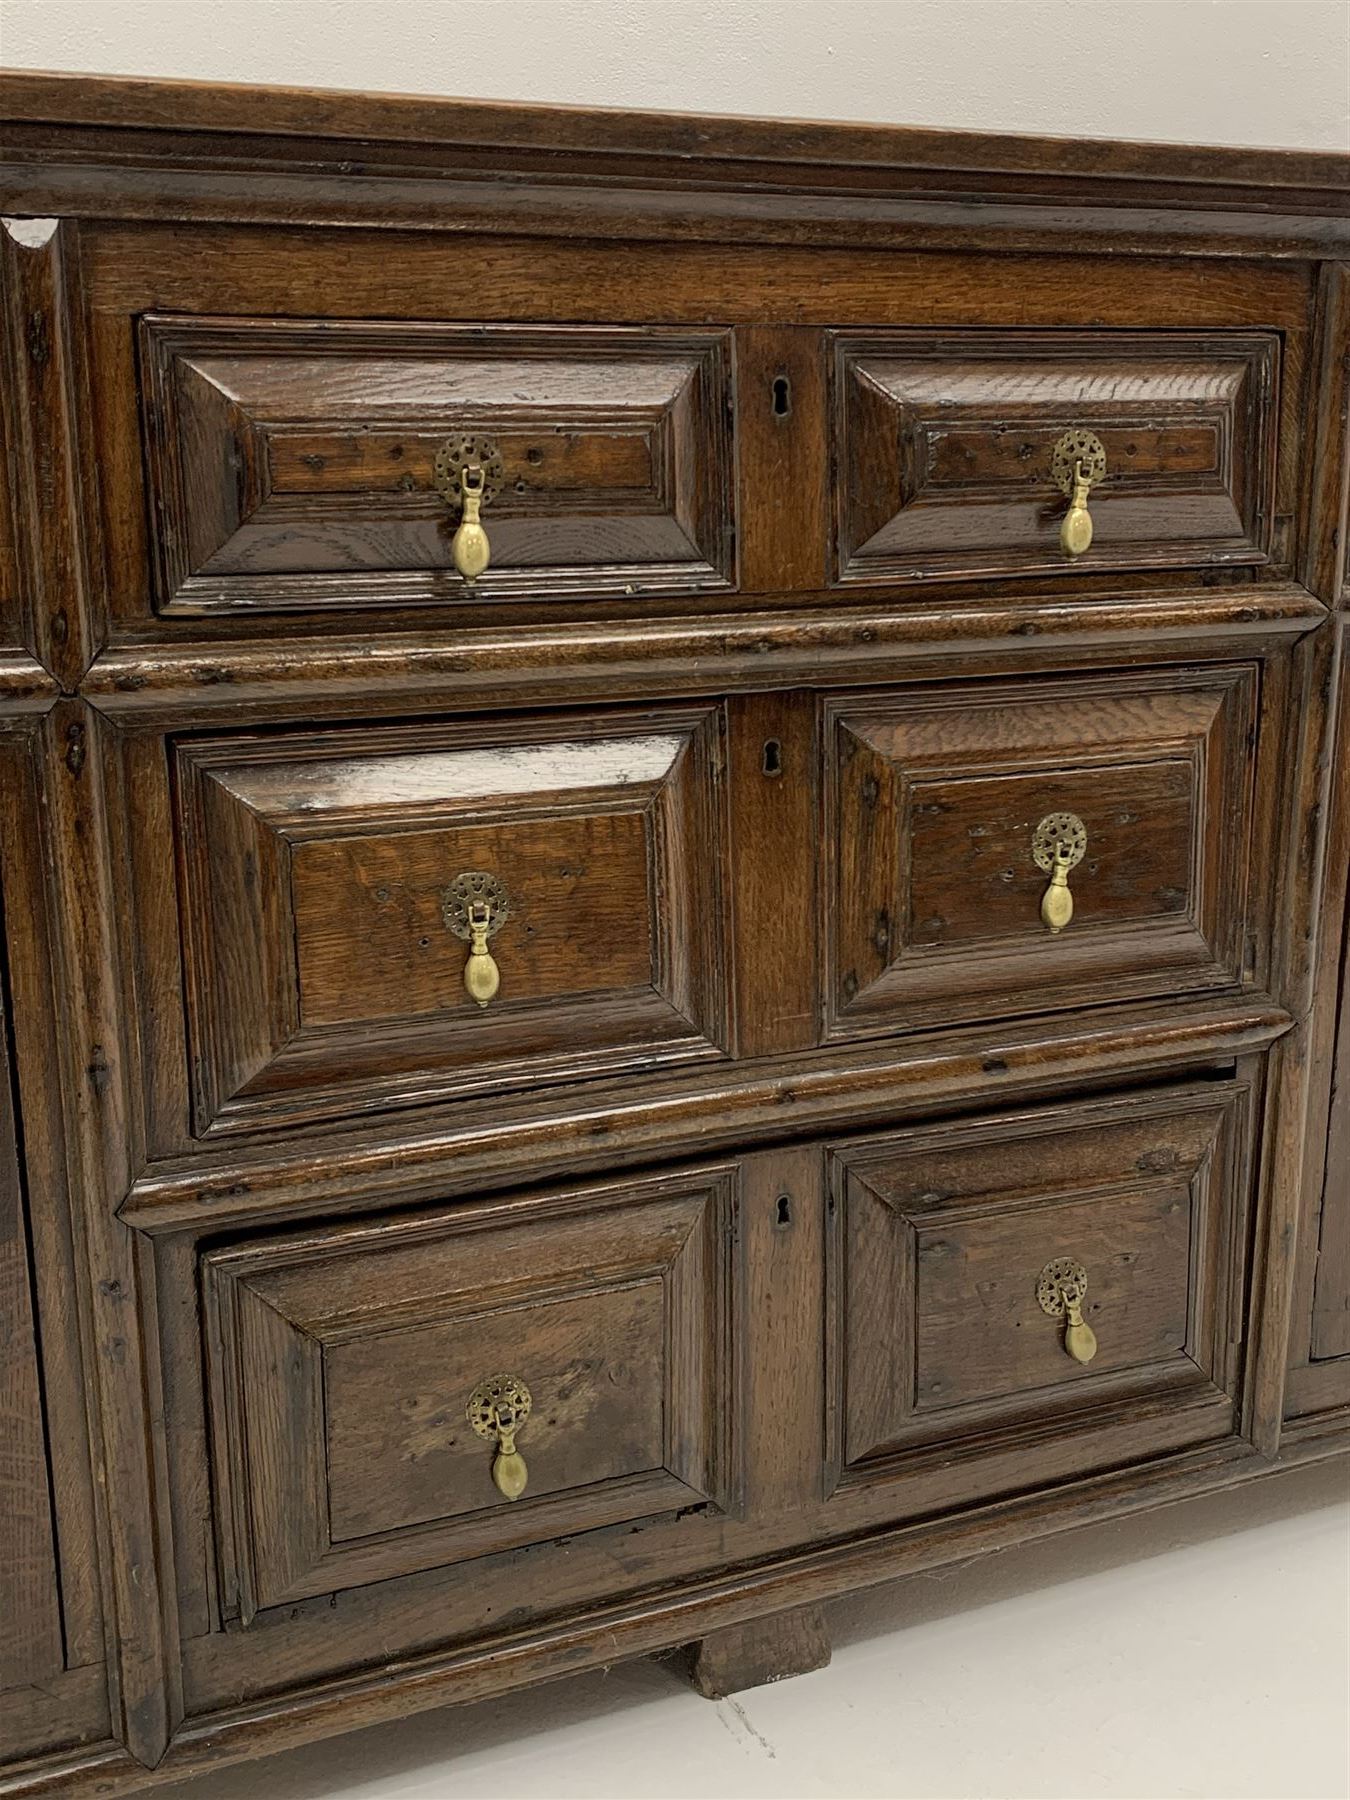 18th century oak dresser base - Image 8 of 13